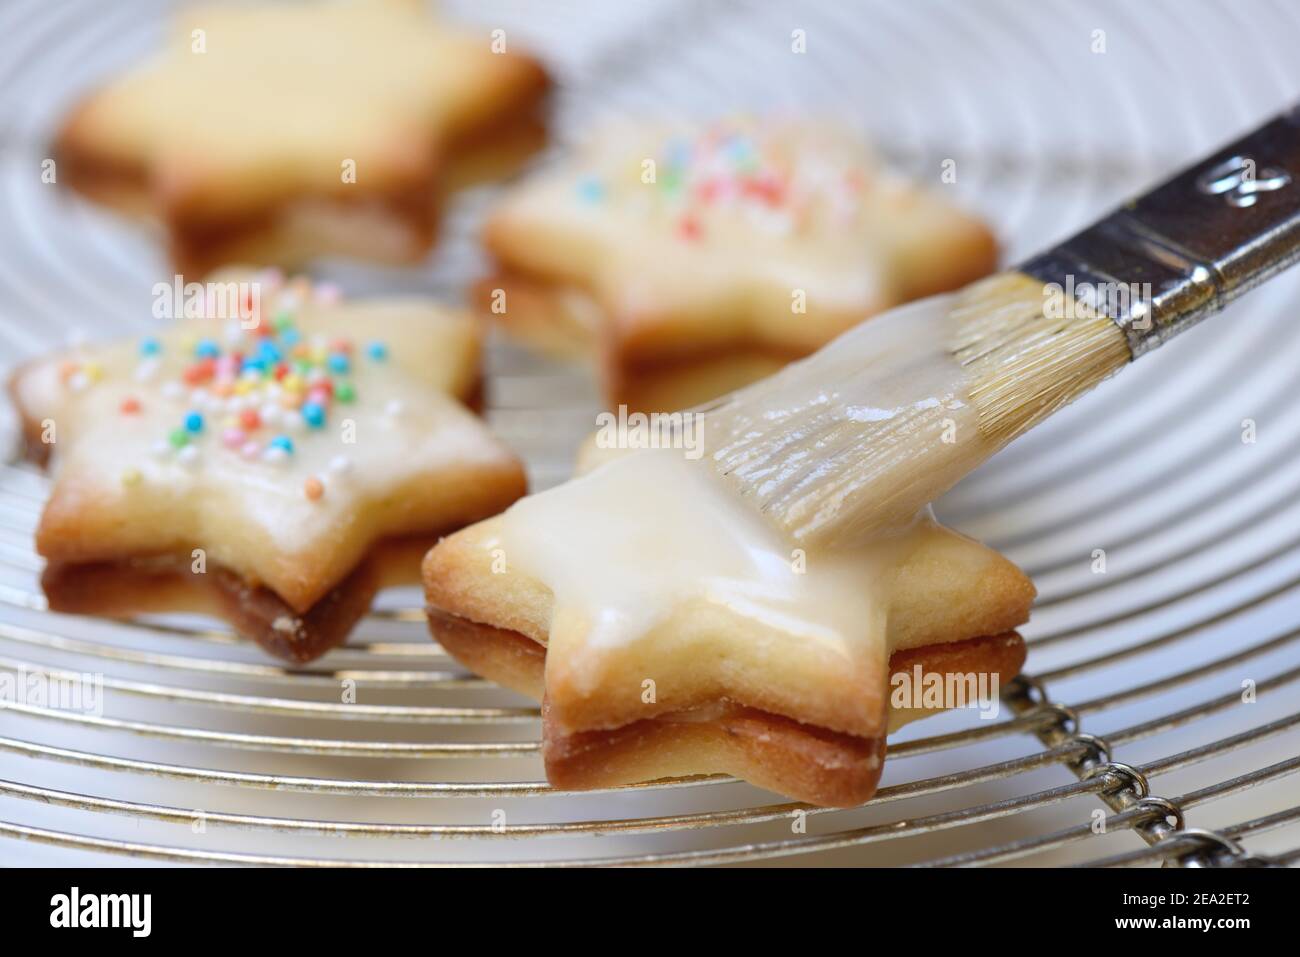 Biscuits with glaze, icing, glaze Stock Photo